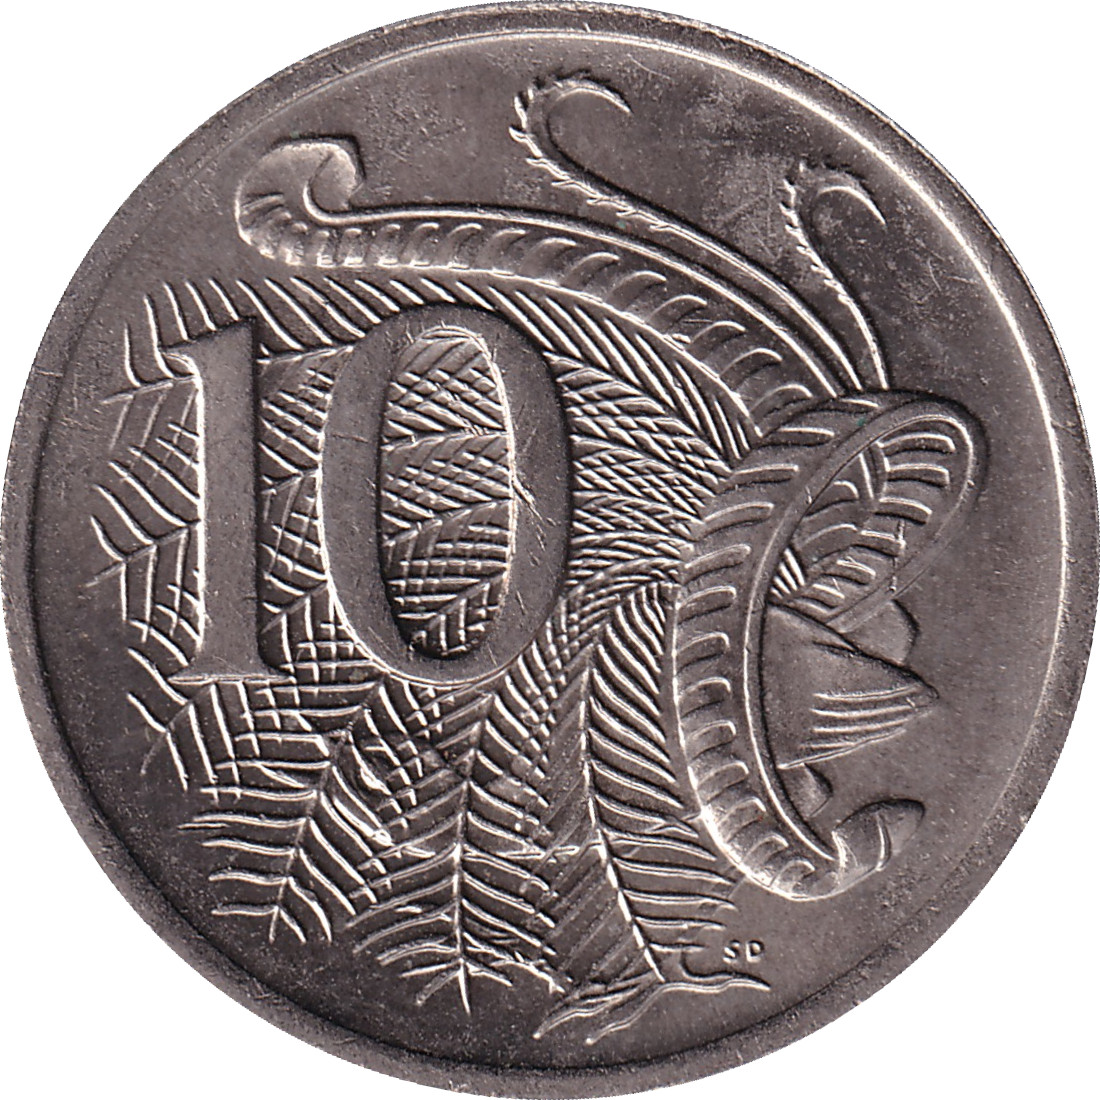 10 cents - Elizabeth II - Buste mature